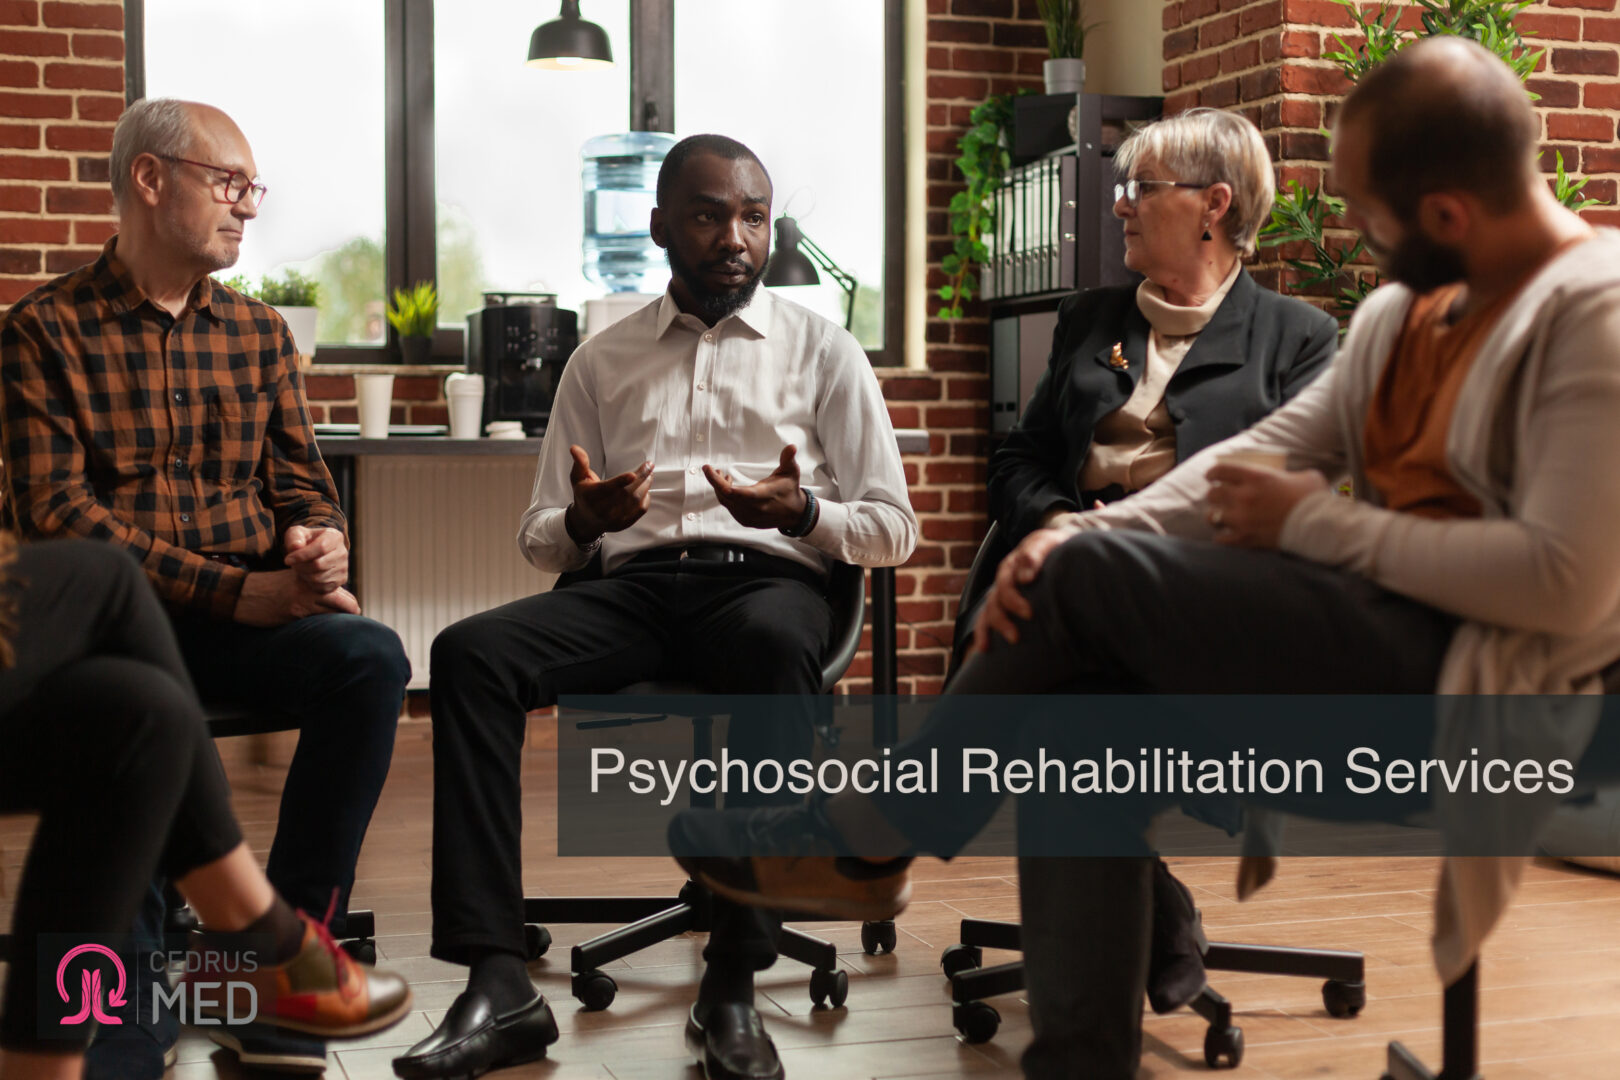 Psychosocial Rehabilitation Services